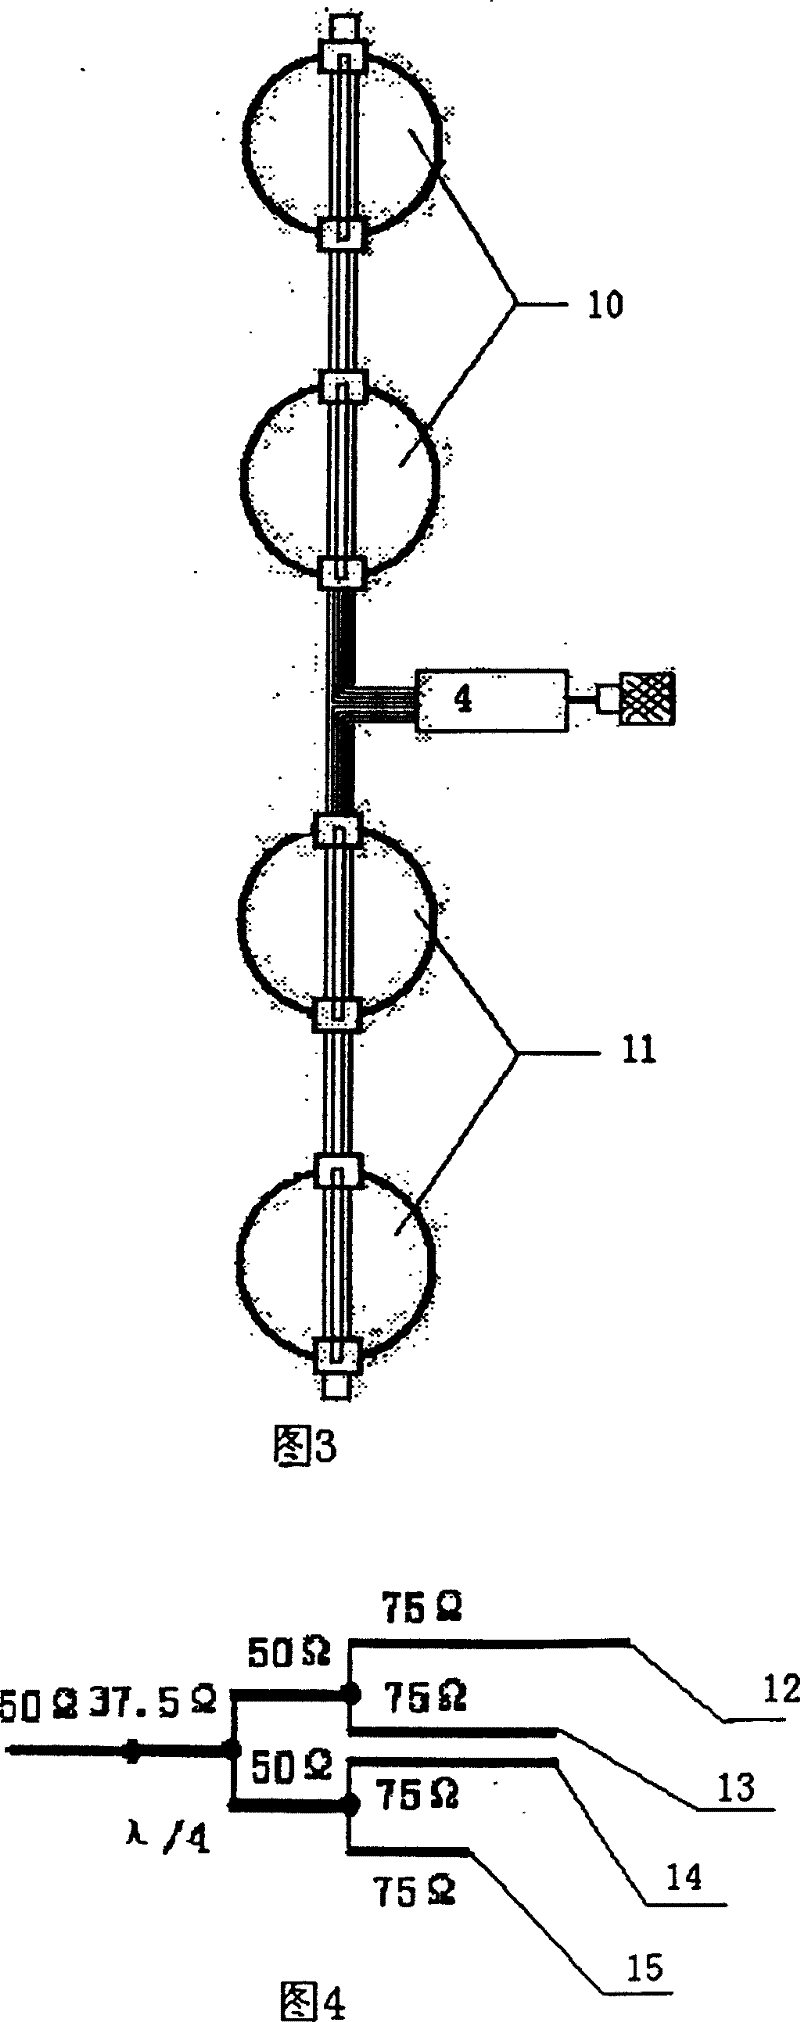 An Orthogonal Loop Antenna